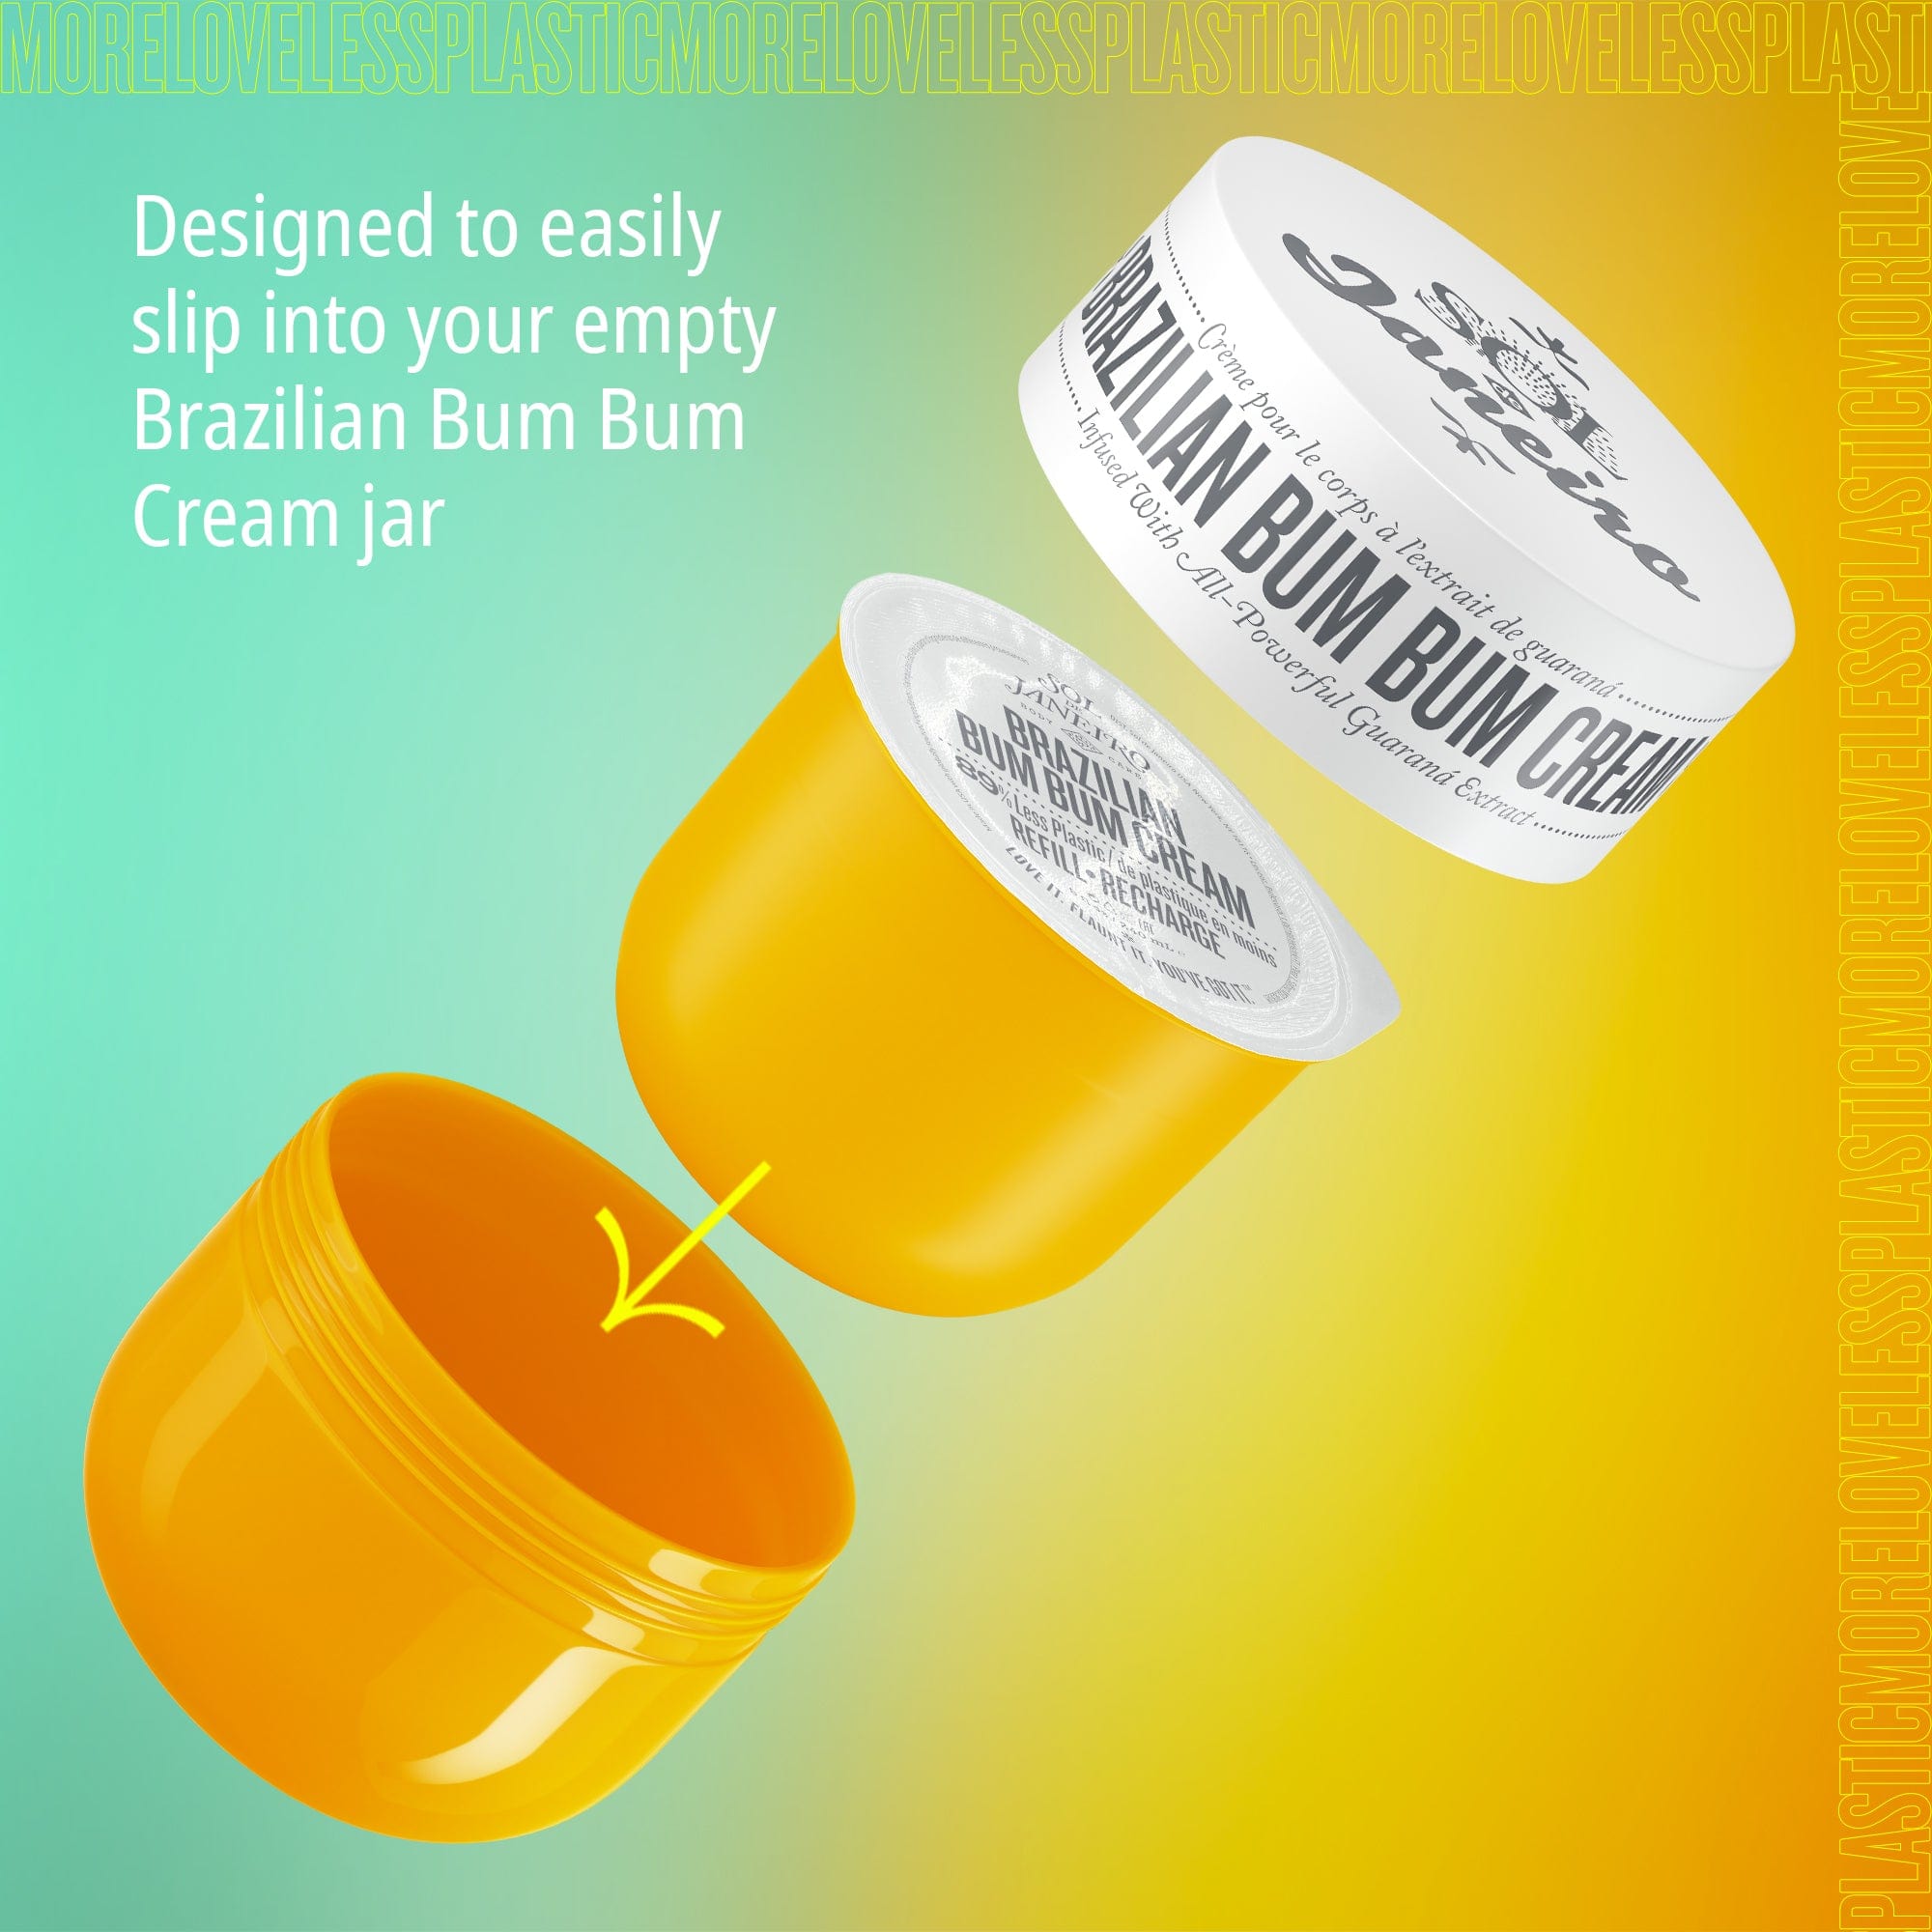 designed to easily slip into your empty brazilian bum bum cream jar